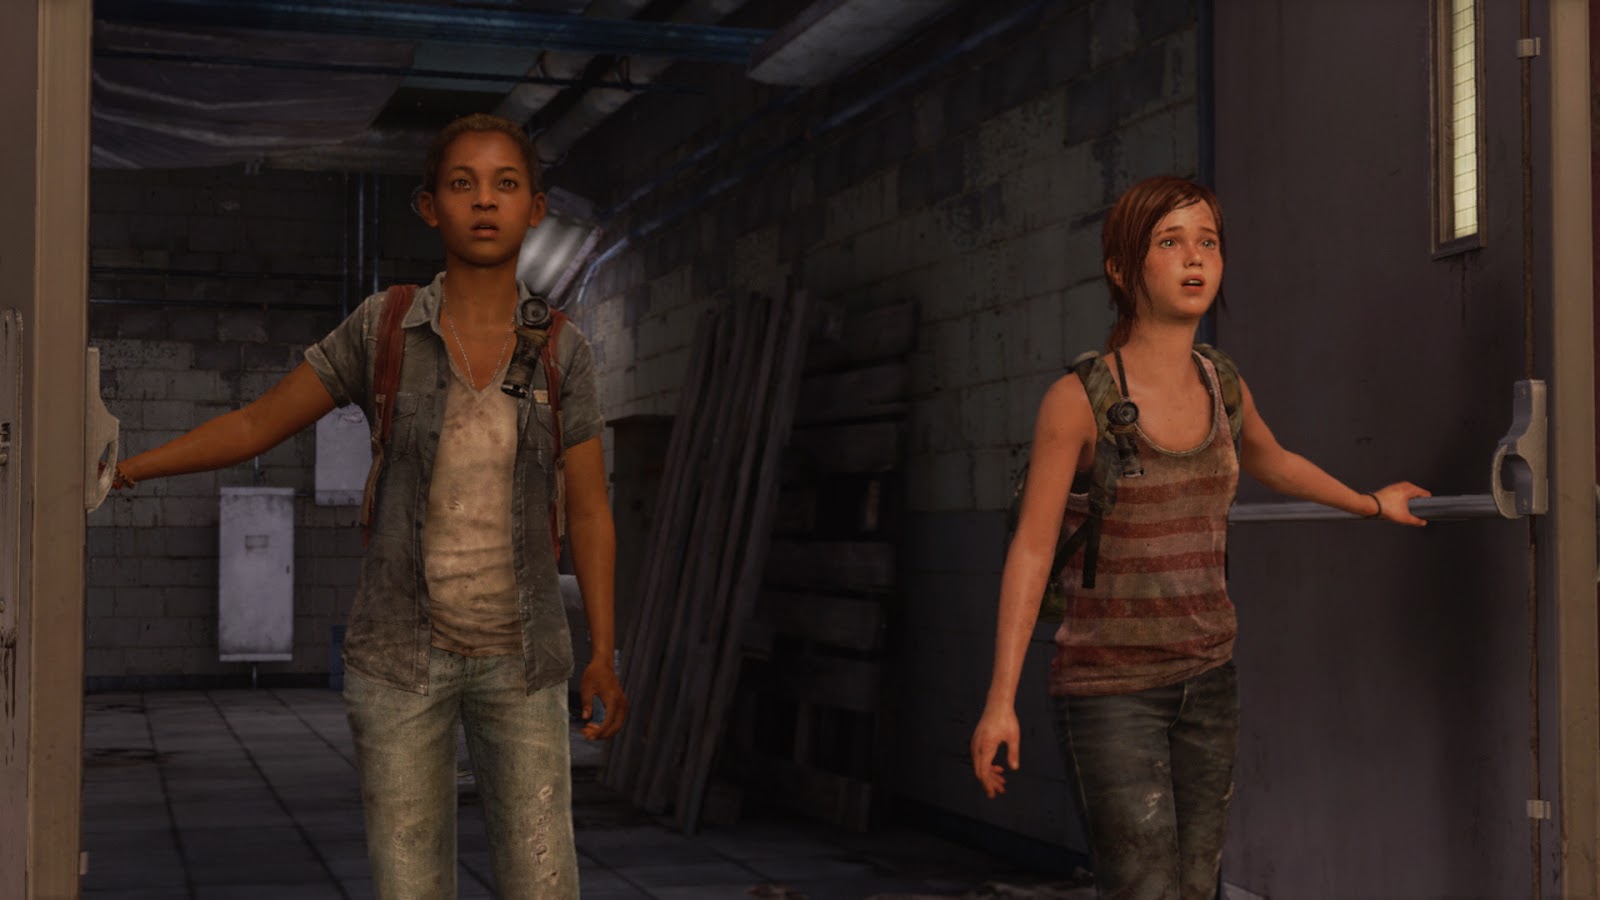 The Last of Us Remastered: Morte de Sarah (PT-BR) 